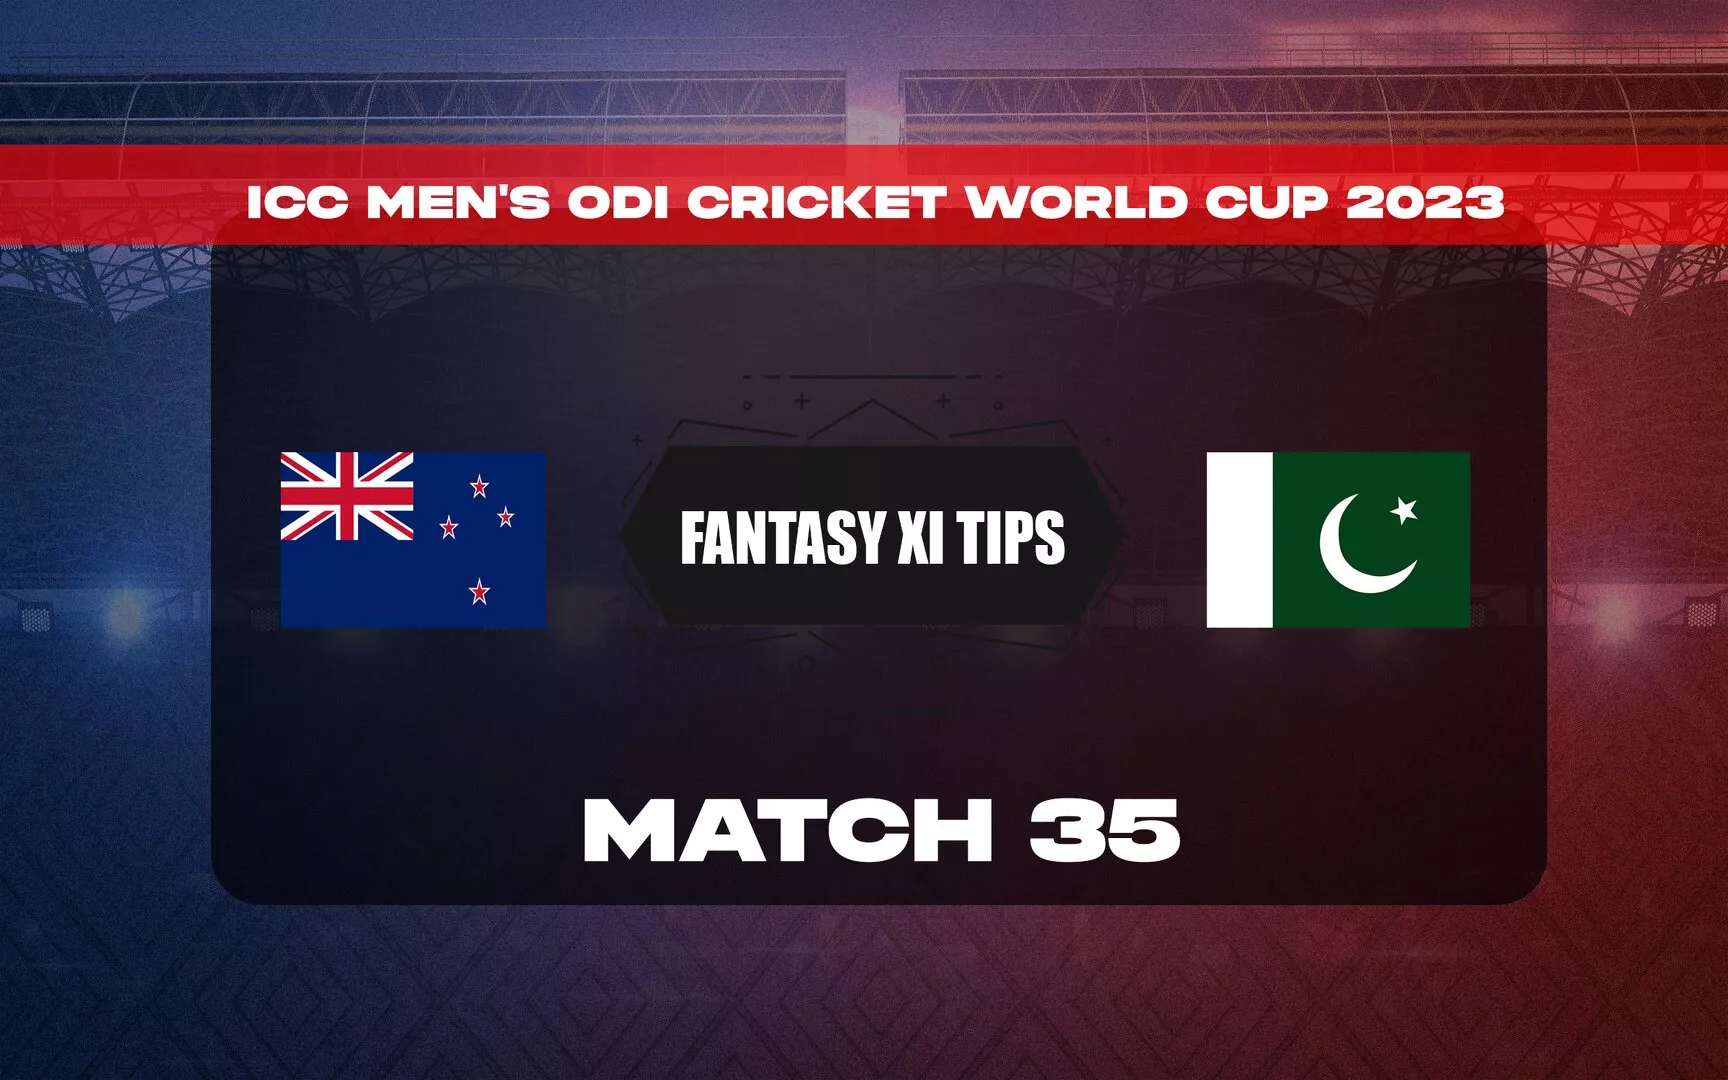 NZ vs PAK Dream11 Prediction, Dream11 Playing XI, Today Match 35, ICC Men’s ODI Cricket World Cup 2023